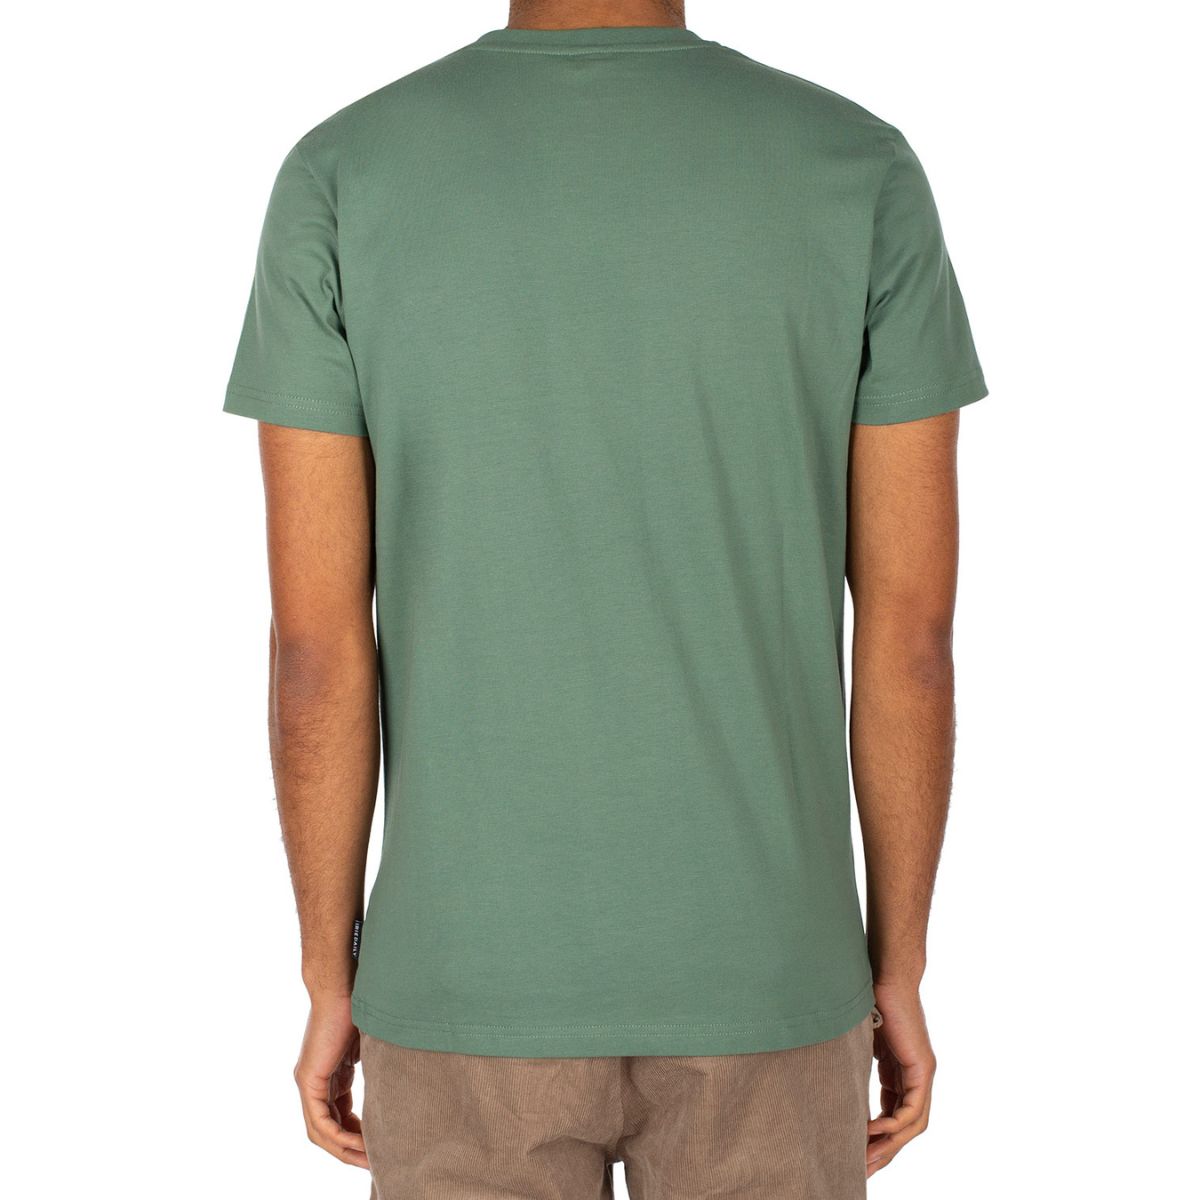 Gonana Emb Tee Jungle Green - T-Shirt Herren